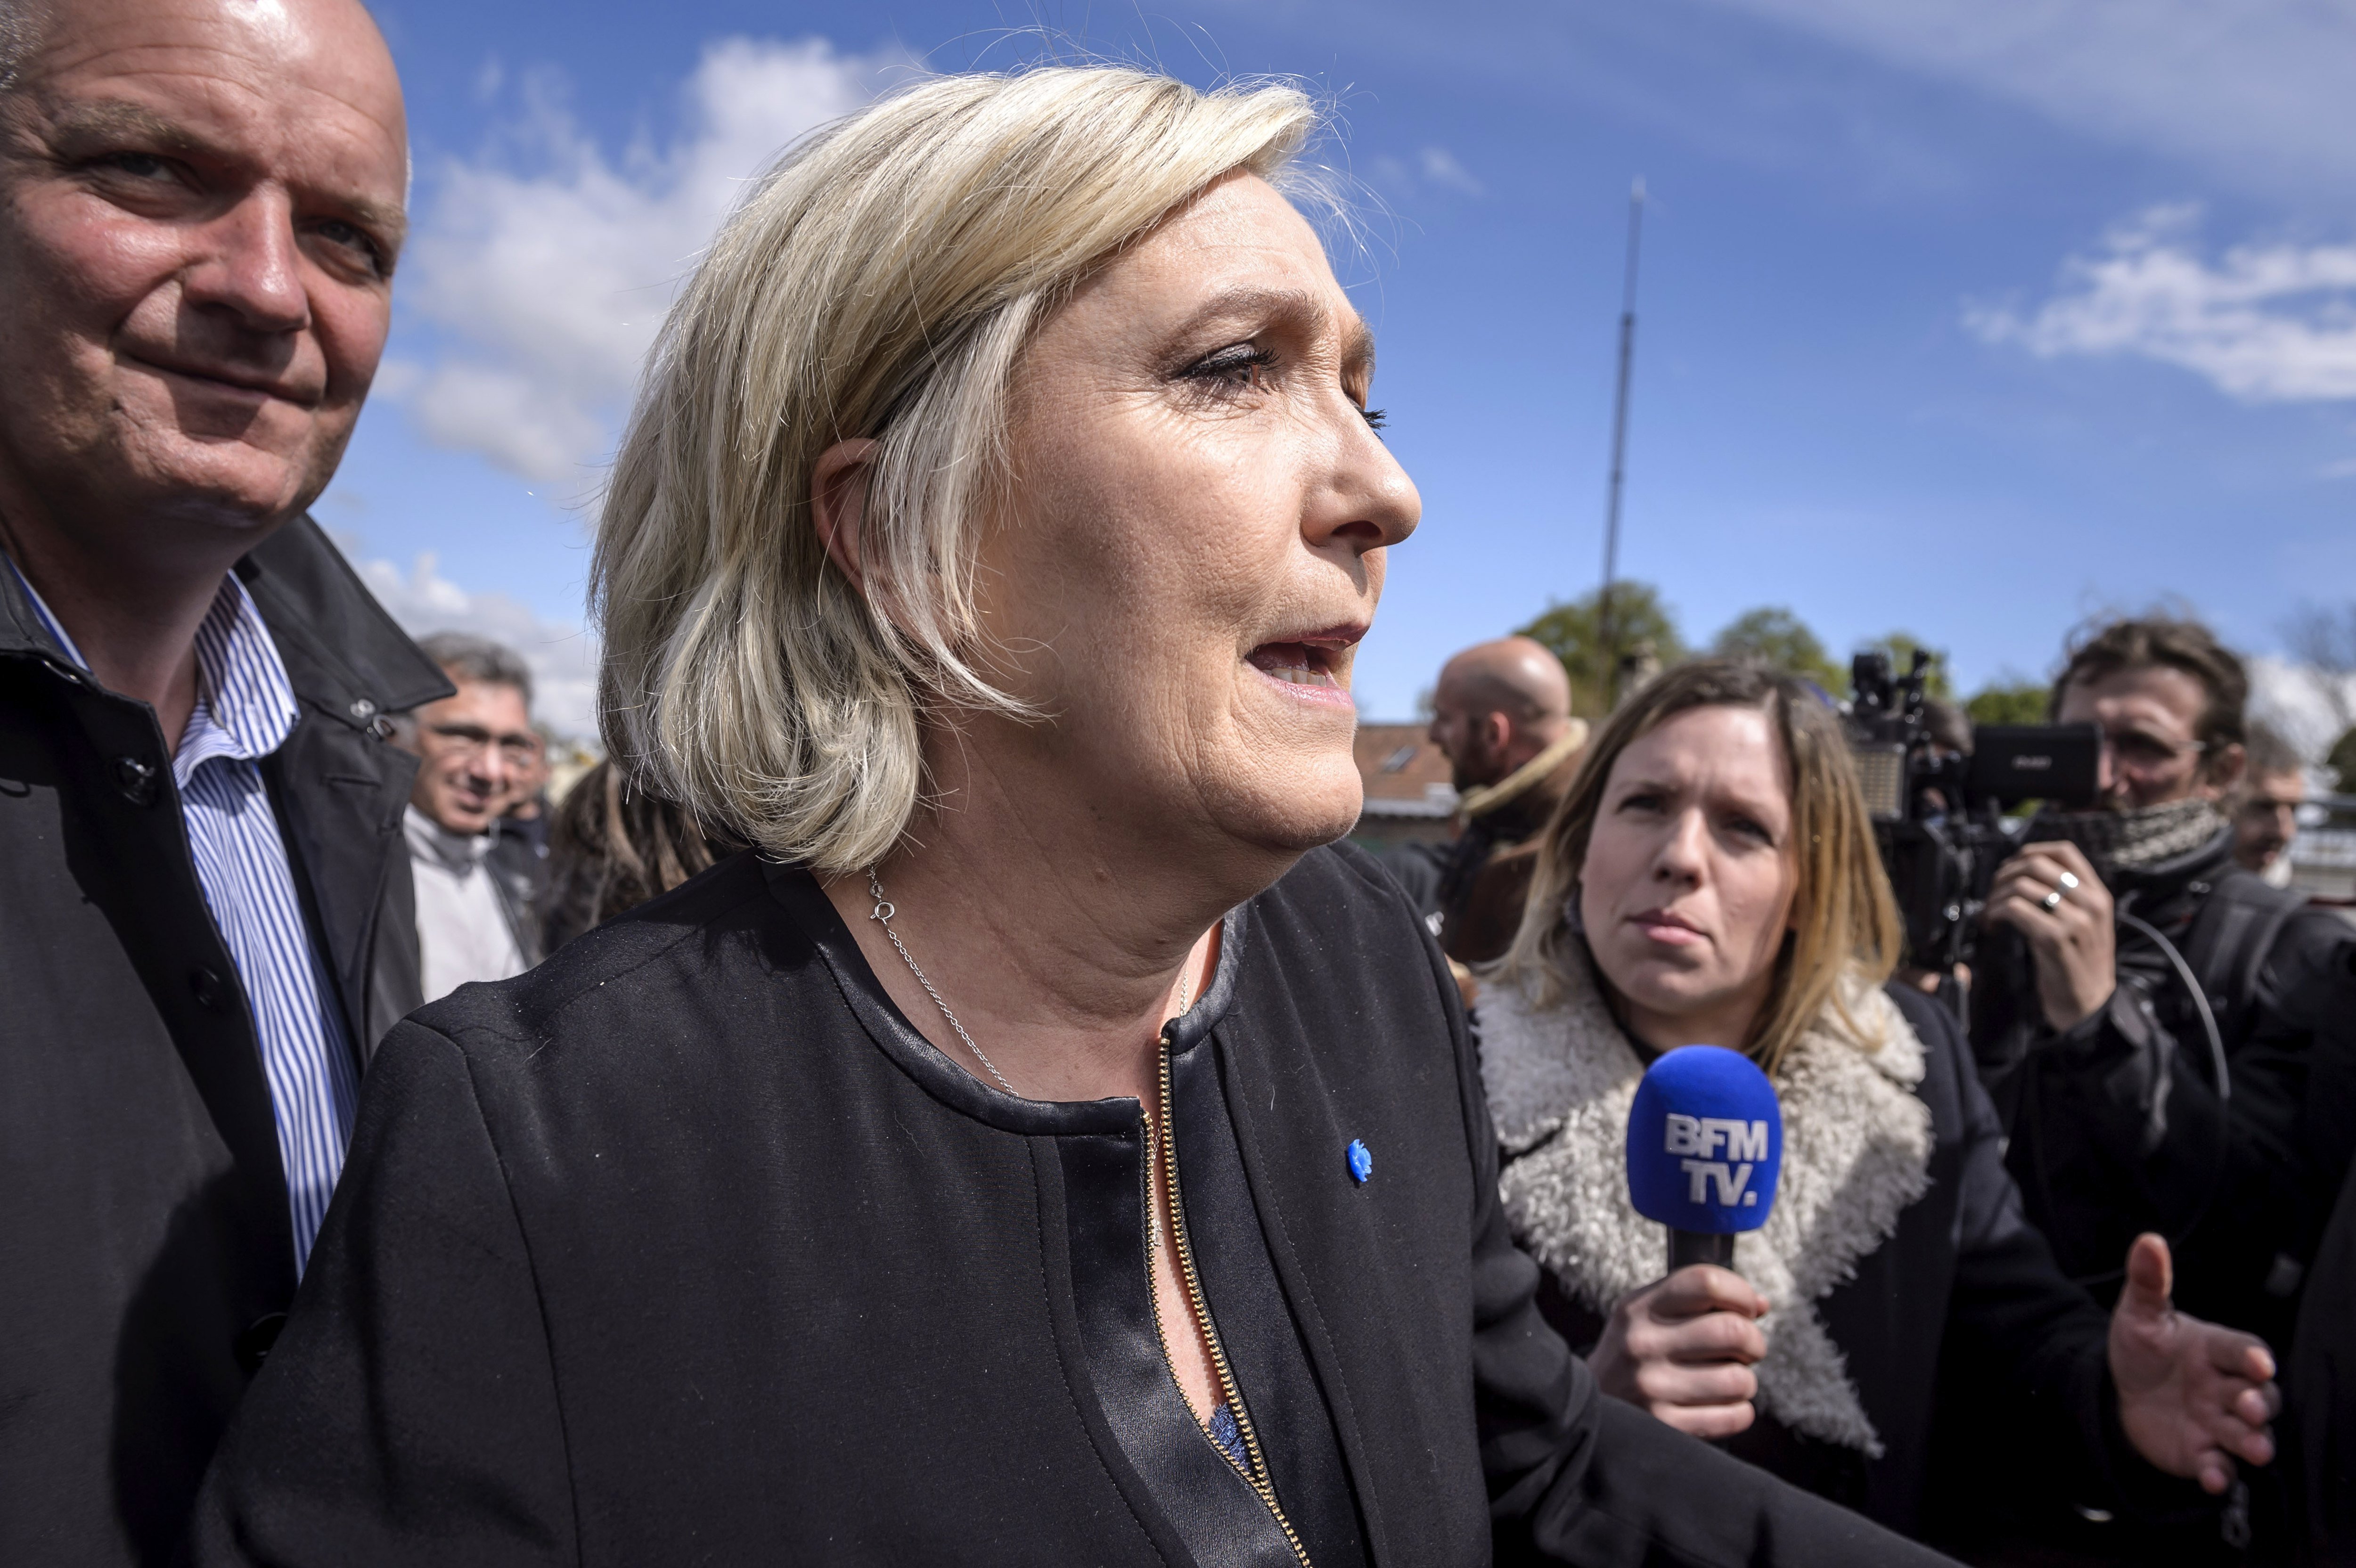 Le Pen promete acabar el TGV hasta Perpinyà si gana las elecciones